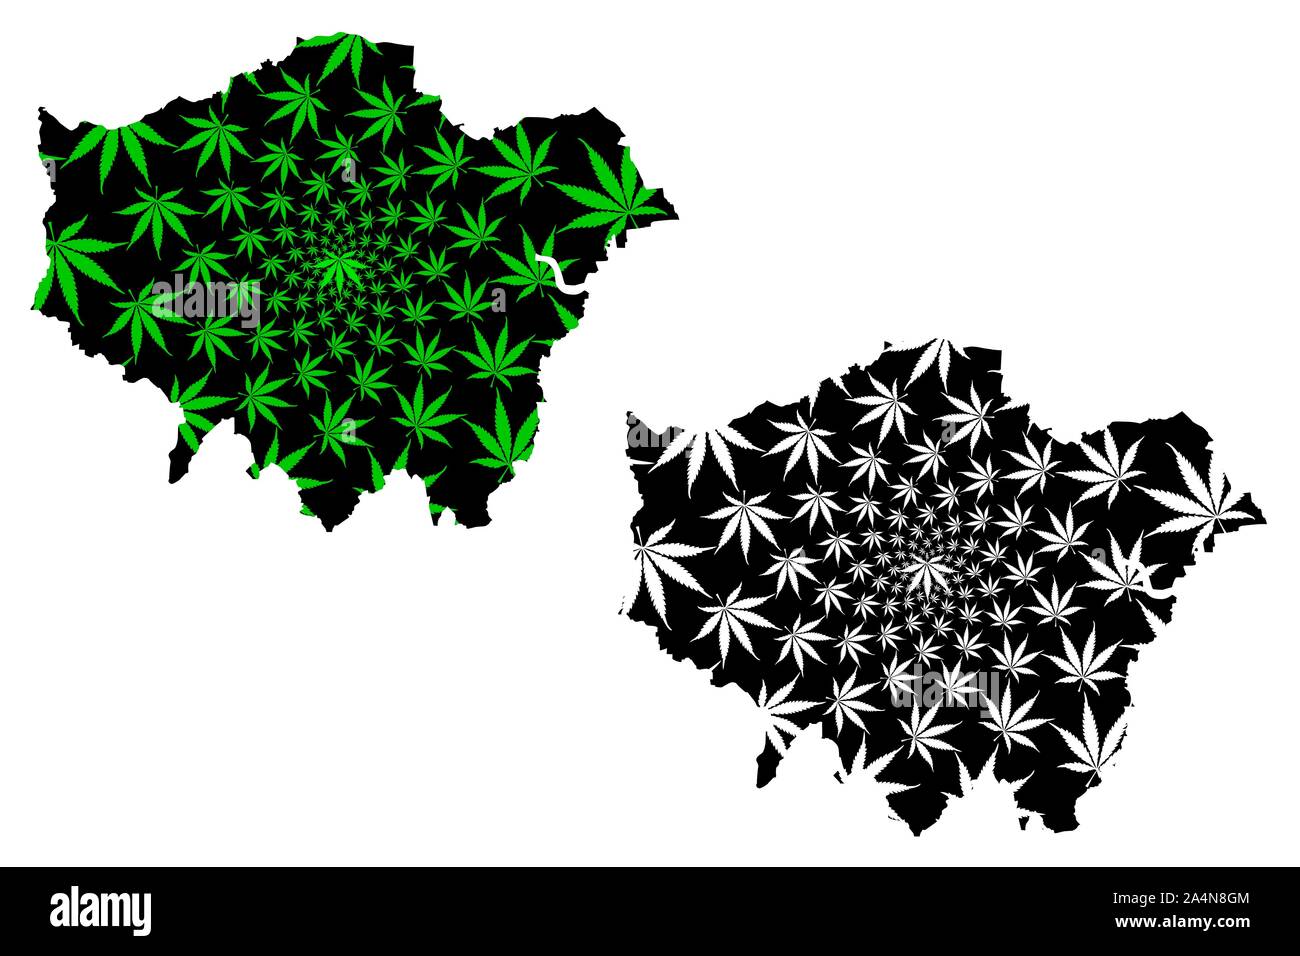 Greater London (United Kingdom, England) map is designed cannabis leaf green and black, London region map made of marijuana (marihuana,THC) foliage Stock Vector